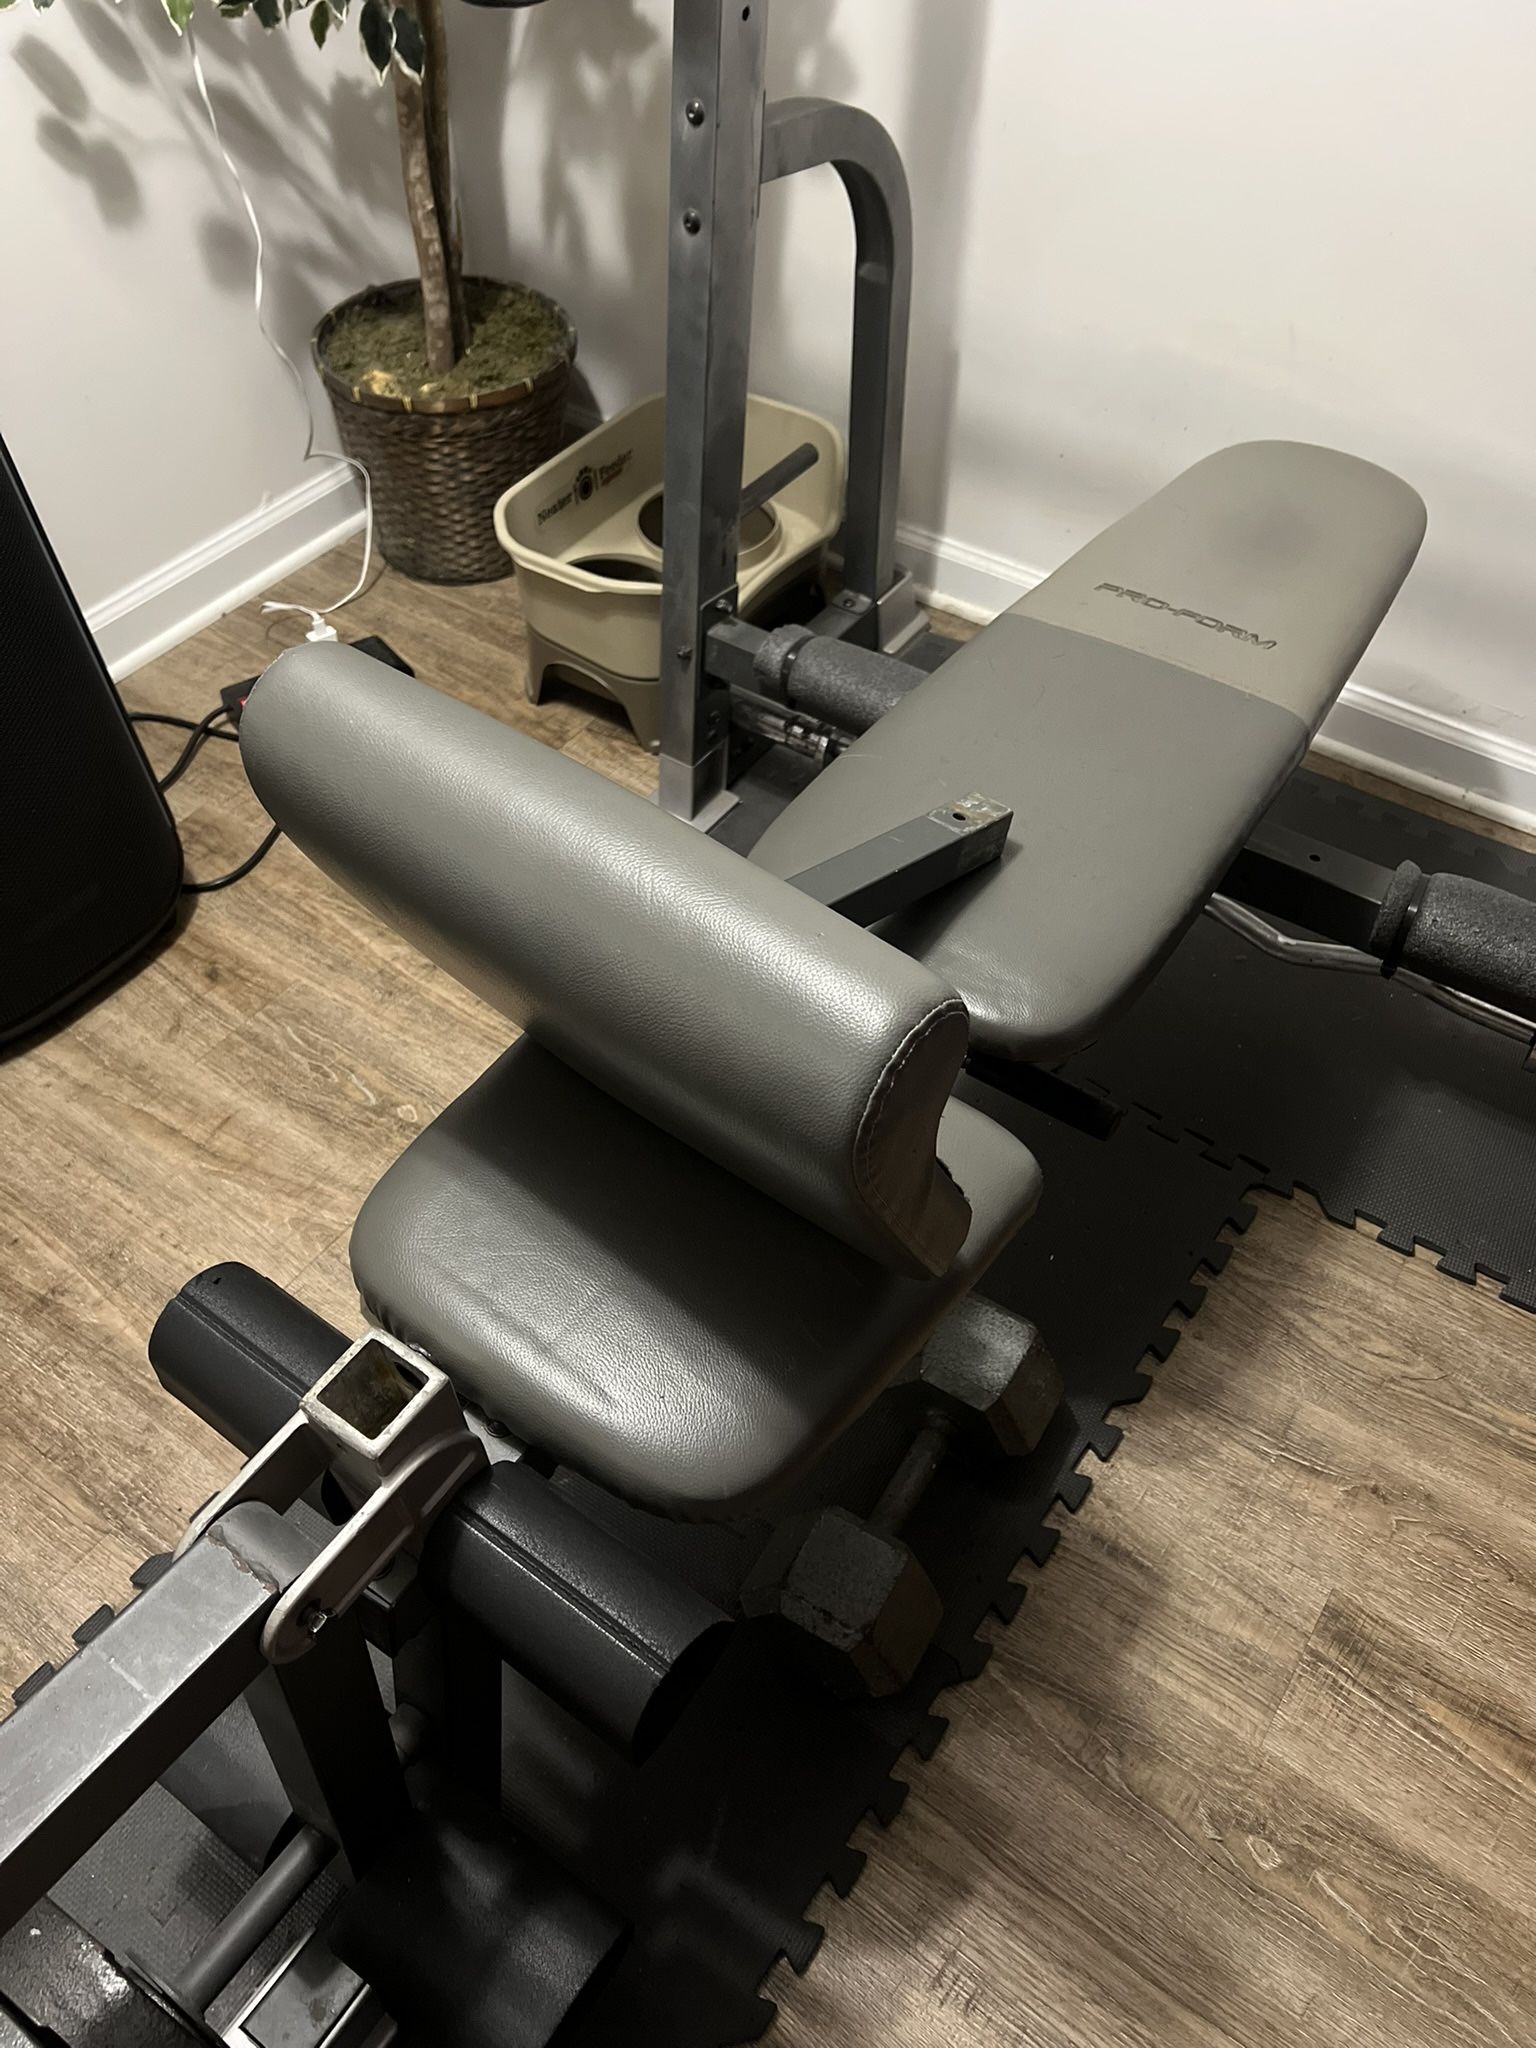 Weight Bench/Squat Rack